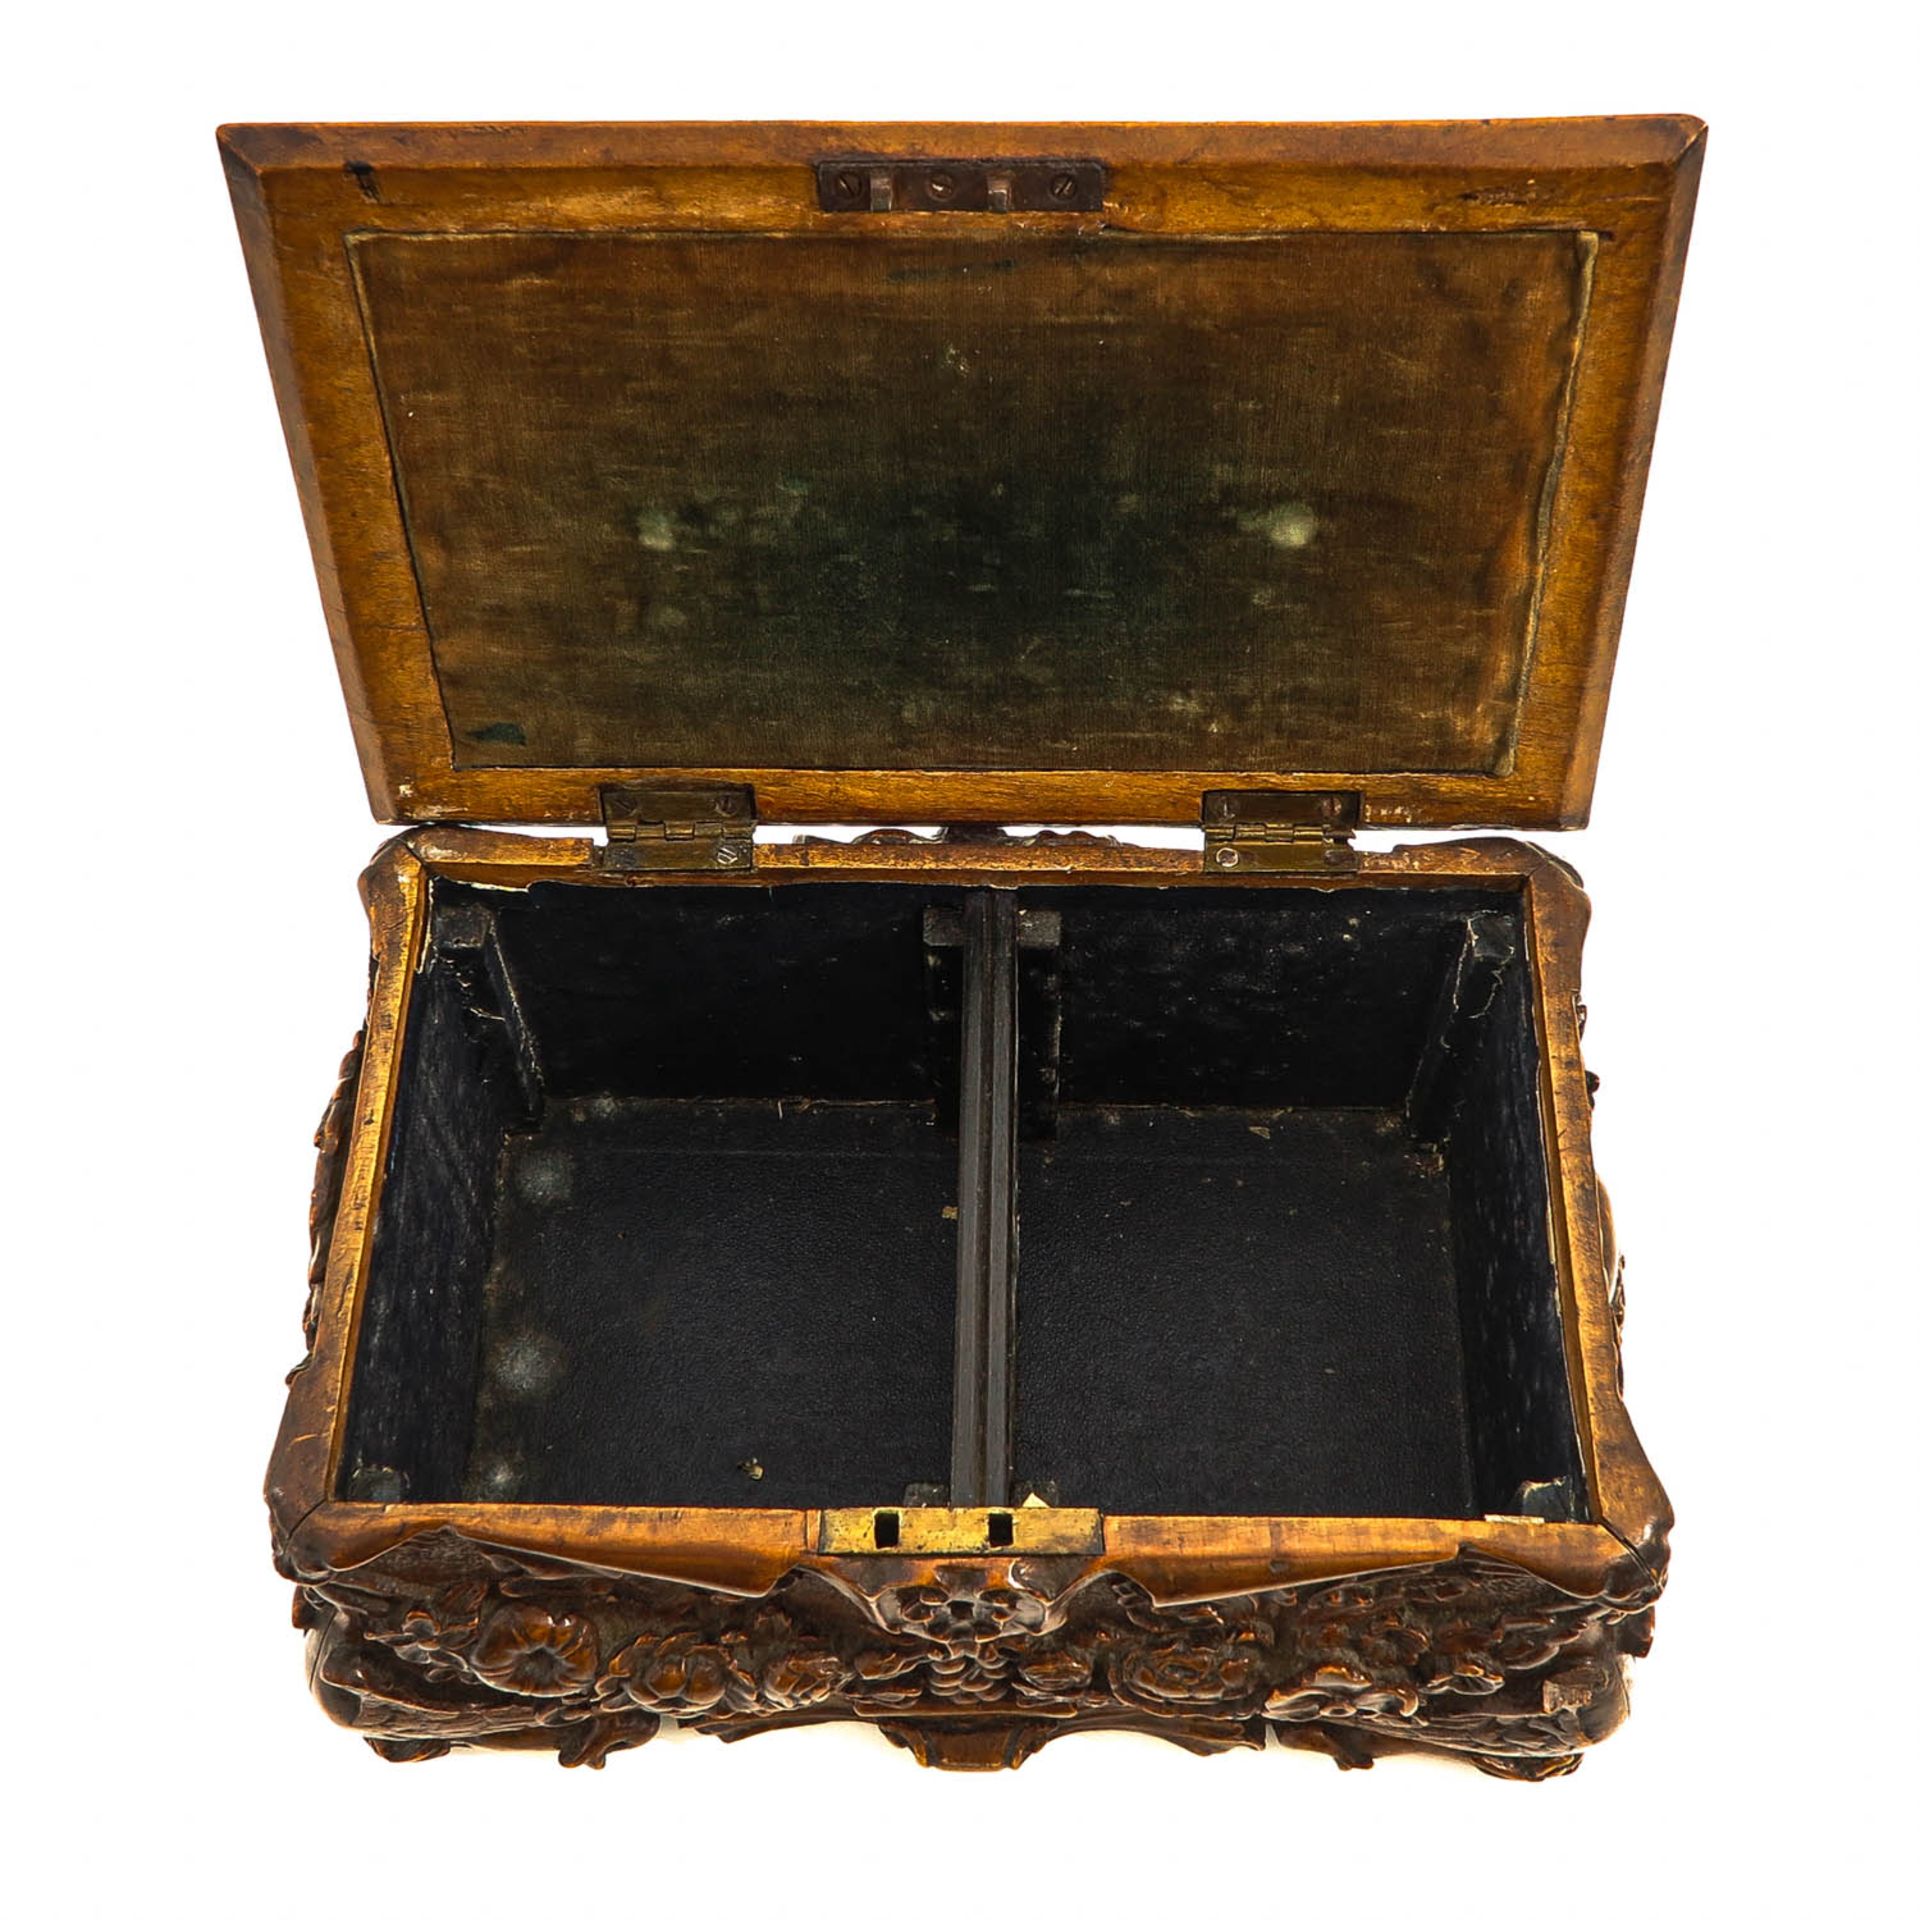 A 19th Century Tea Box - Image 8 of 10